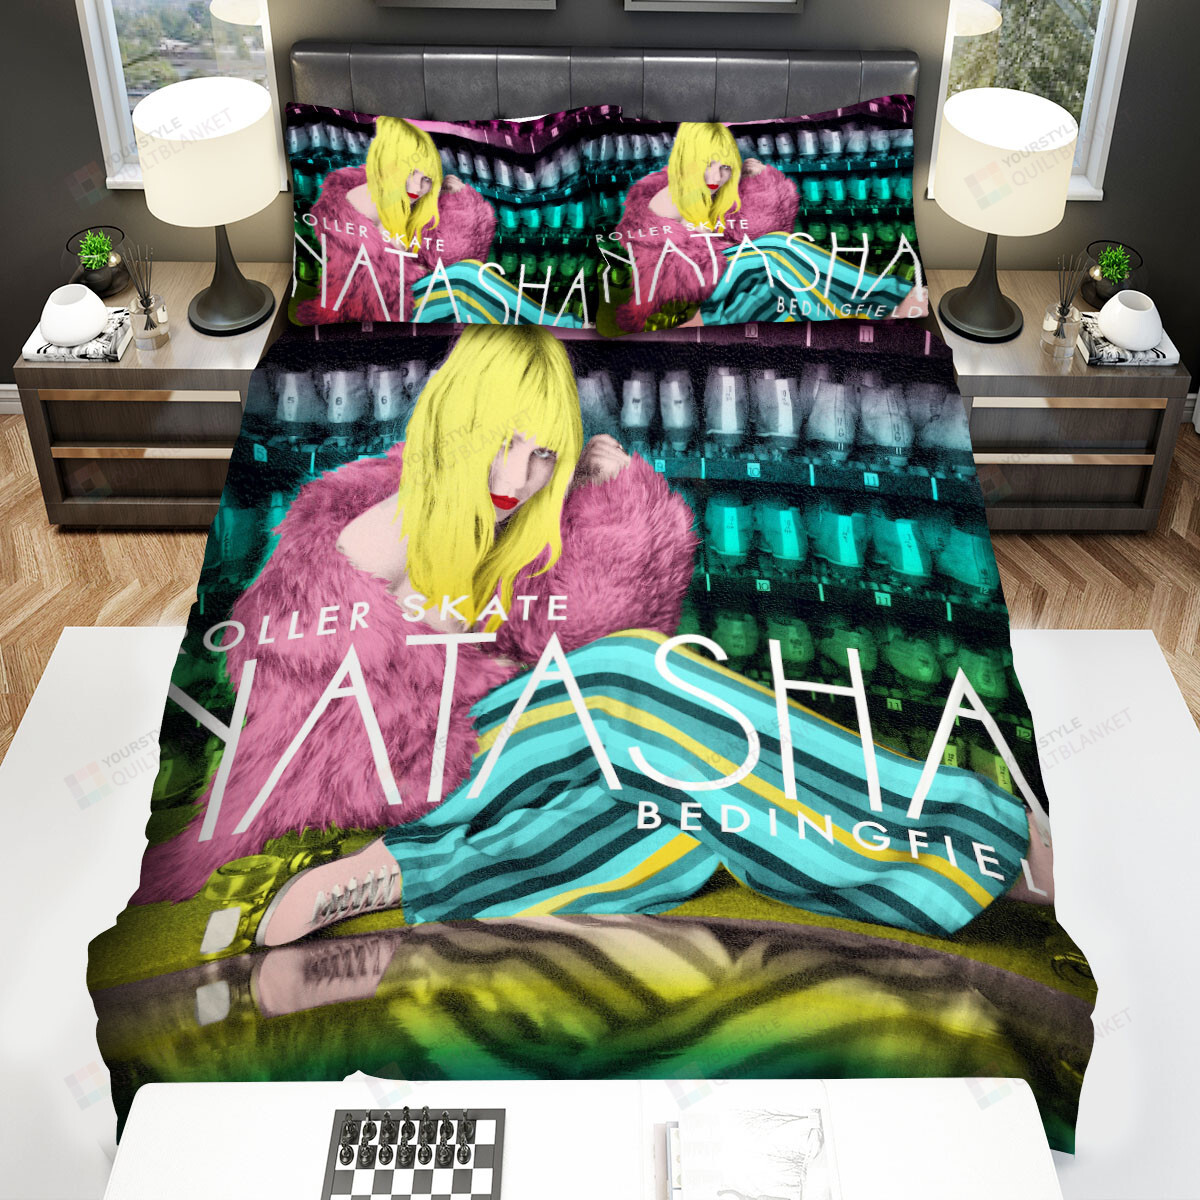 Natasha Bedingfield Roller Skate Cover Bed Sheets Spread Comforter Duvet Cover Bedding Sets